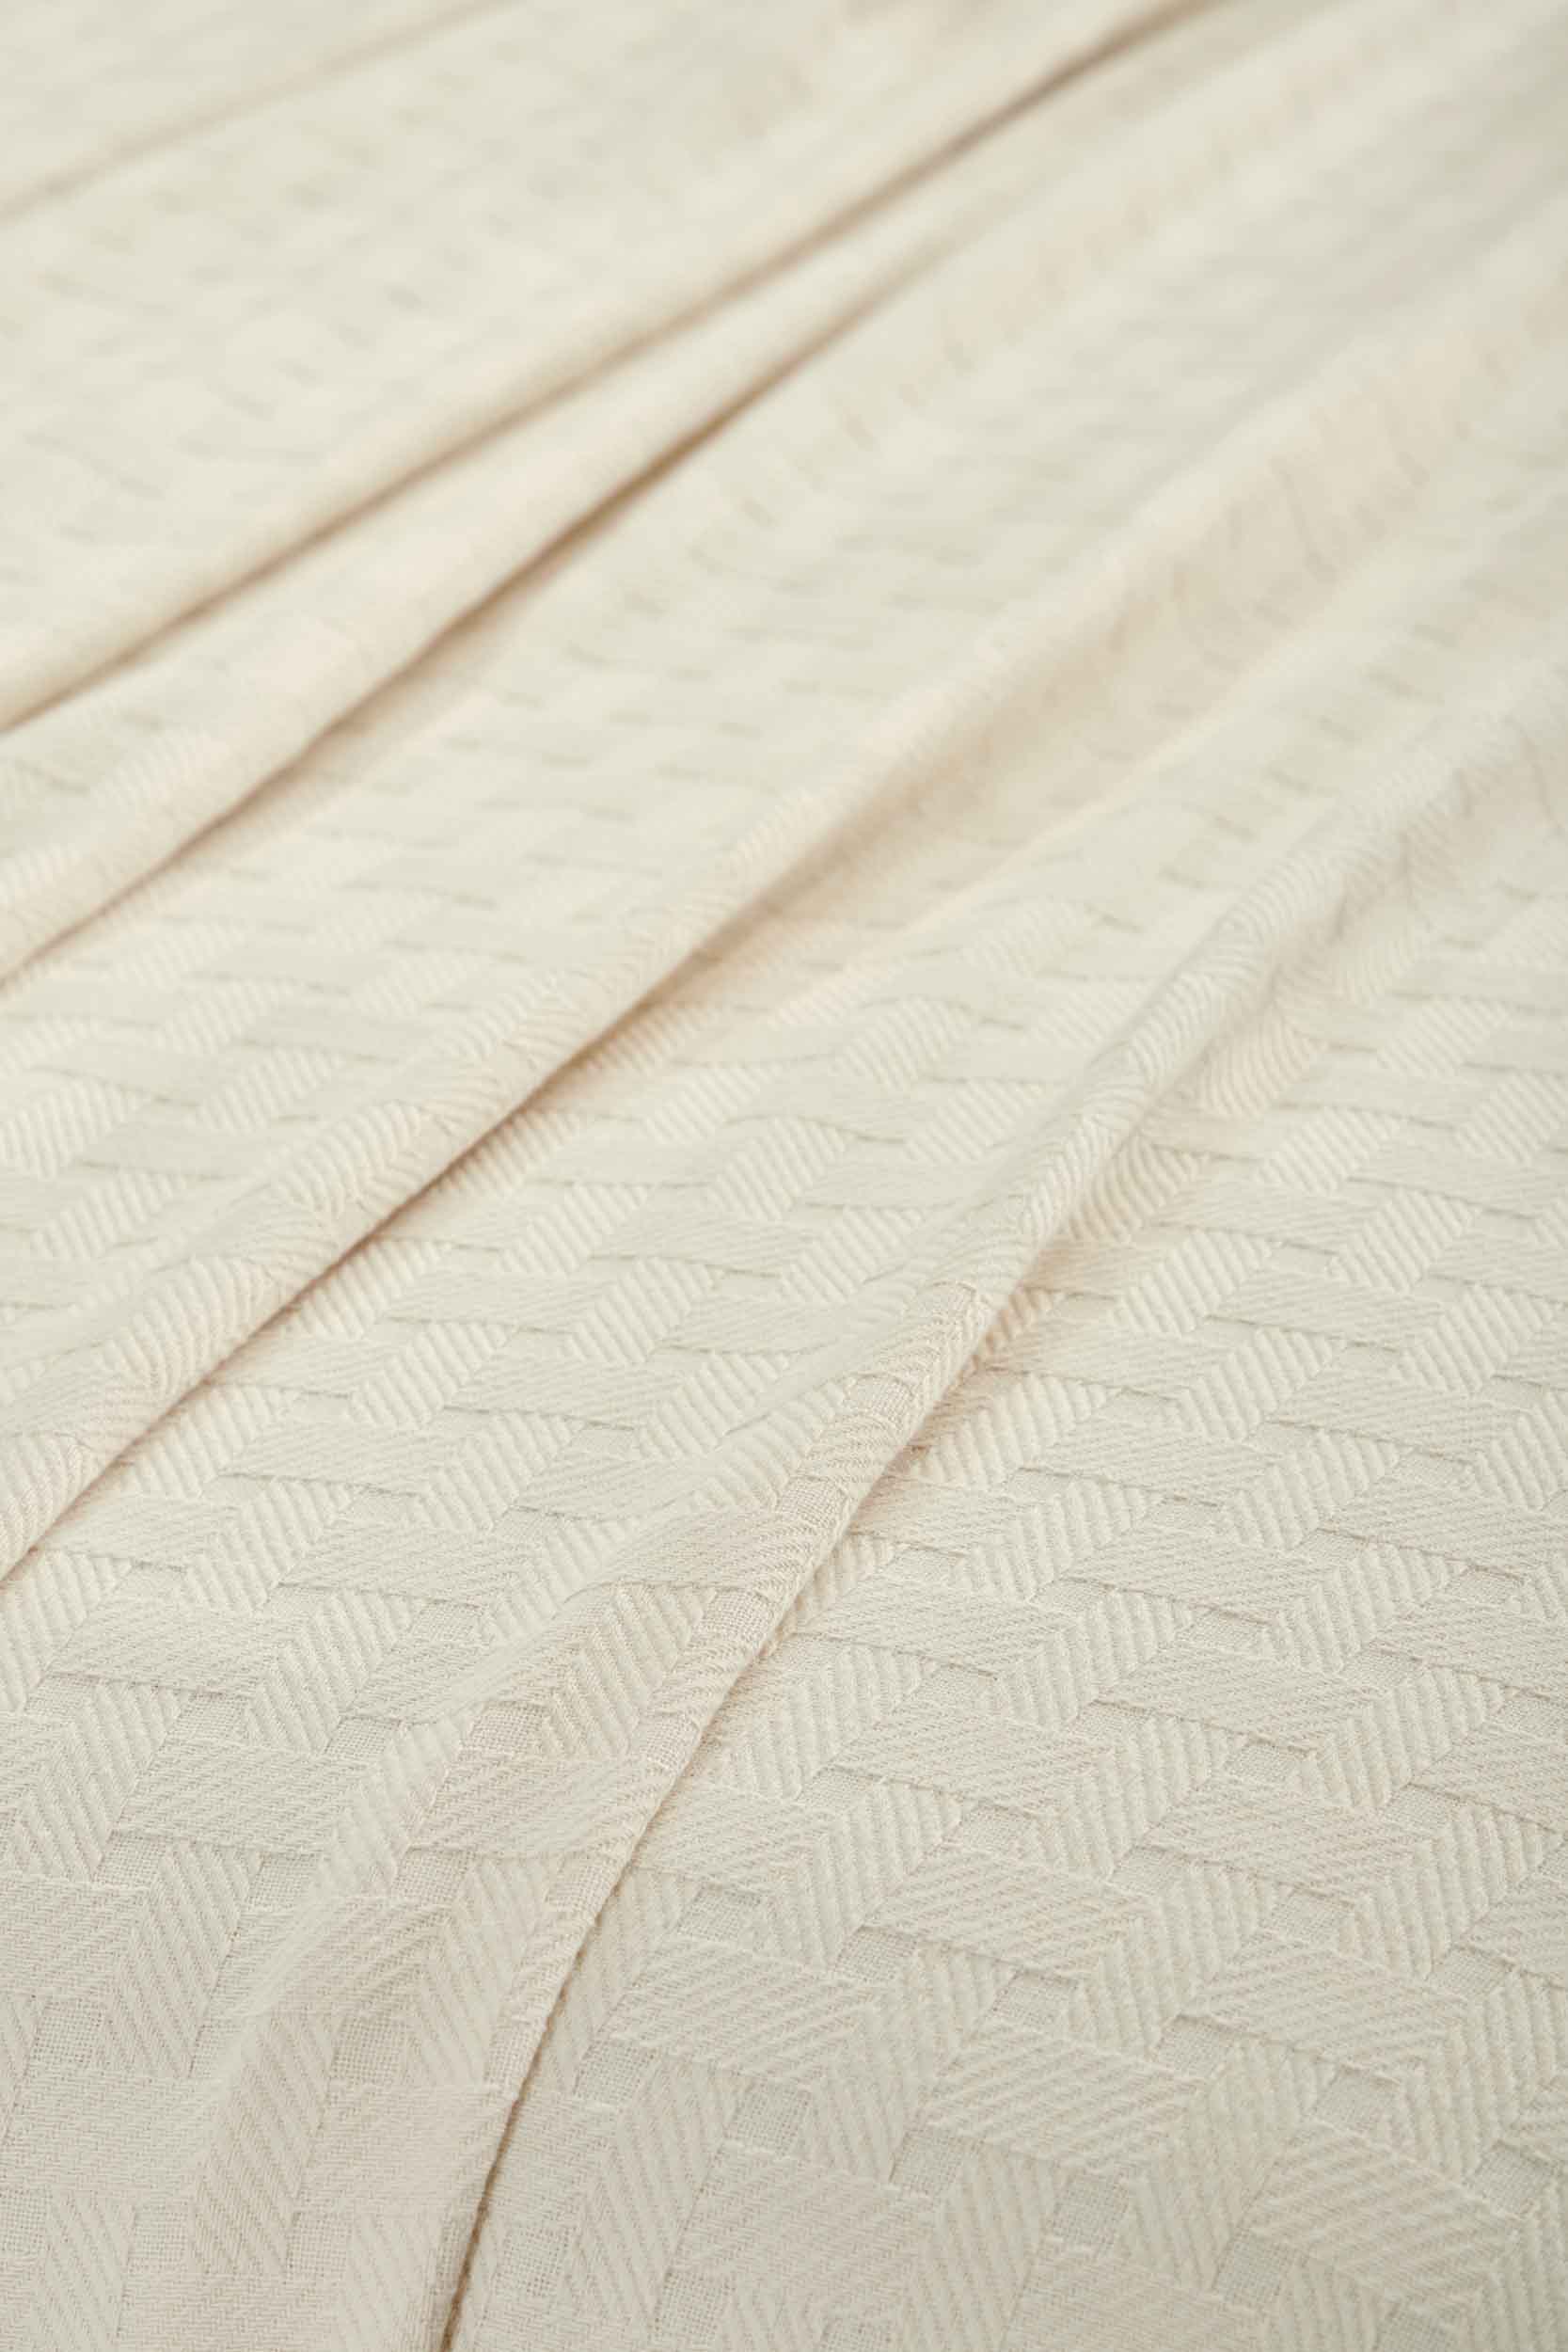 Basketweave All Season Cotton Blanket - Ivory